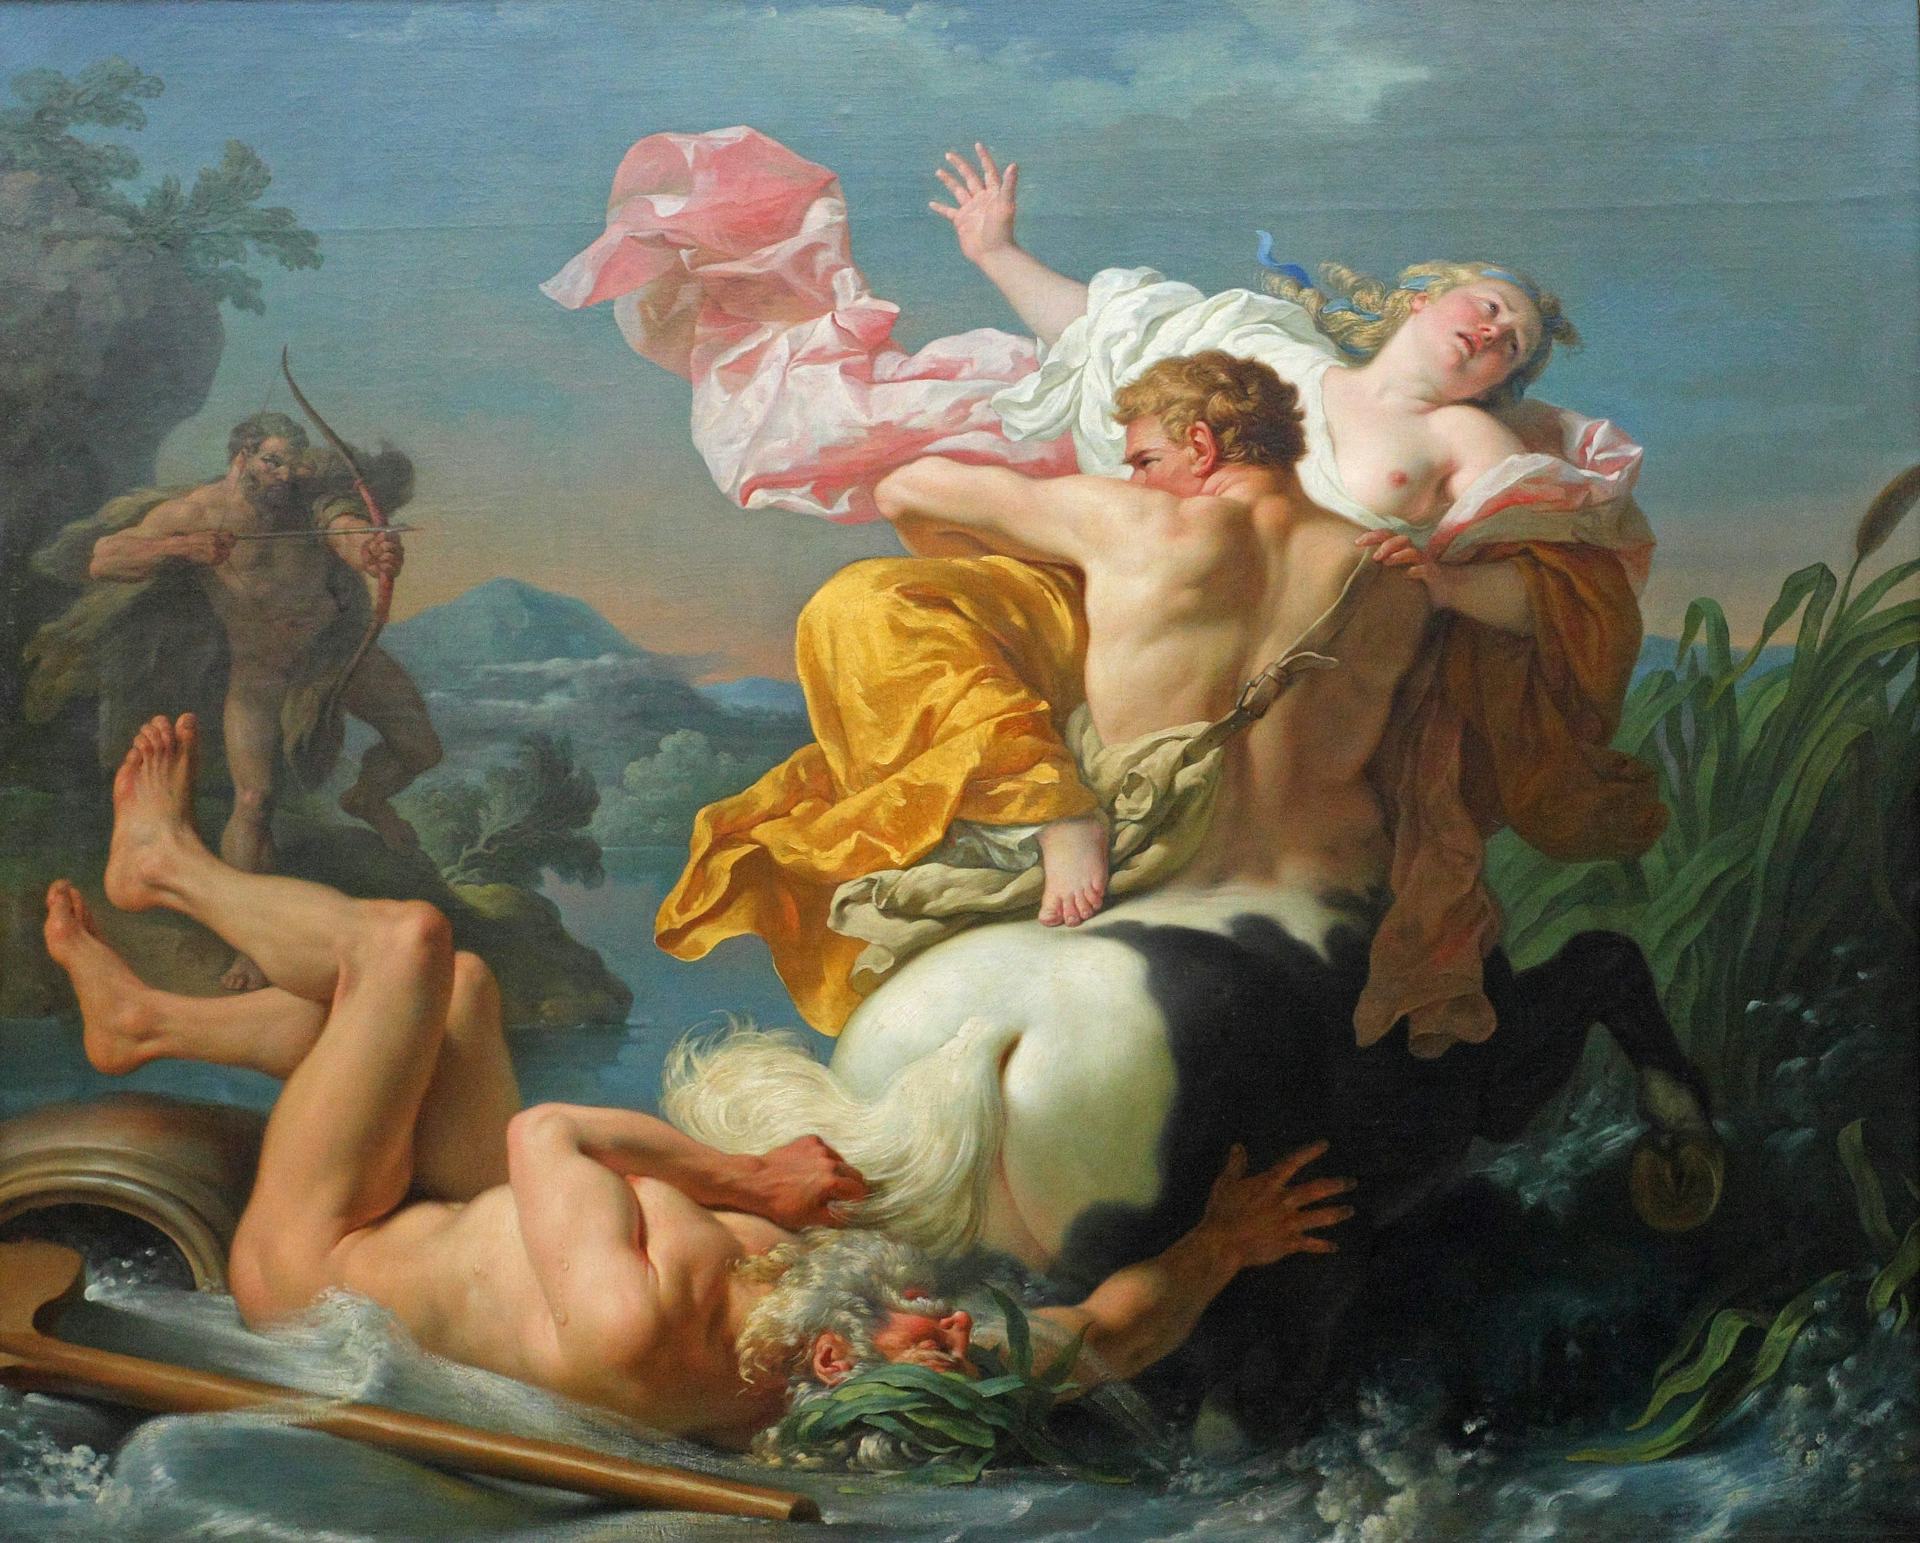 The Abduction of Deianeira by the Centaur Nessus by Louis-Jean-François Lagrenée (1755)